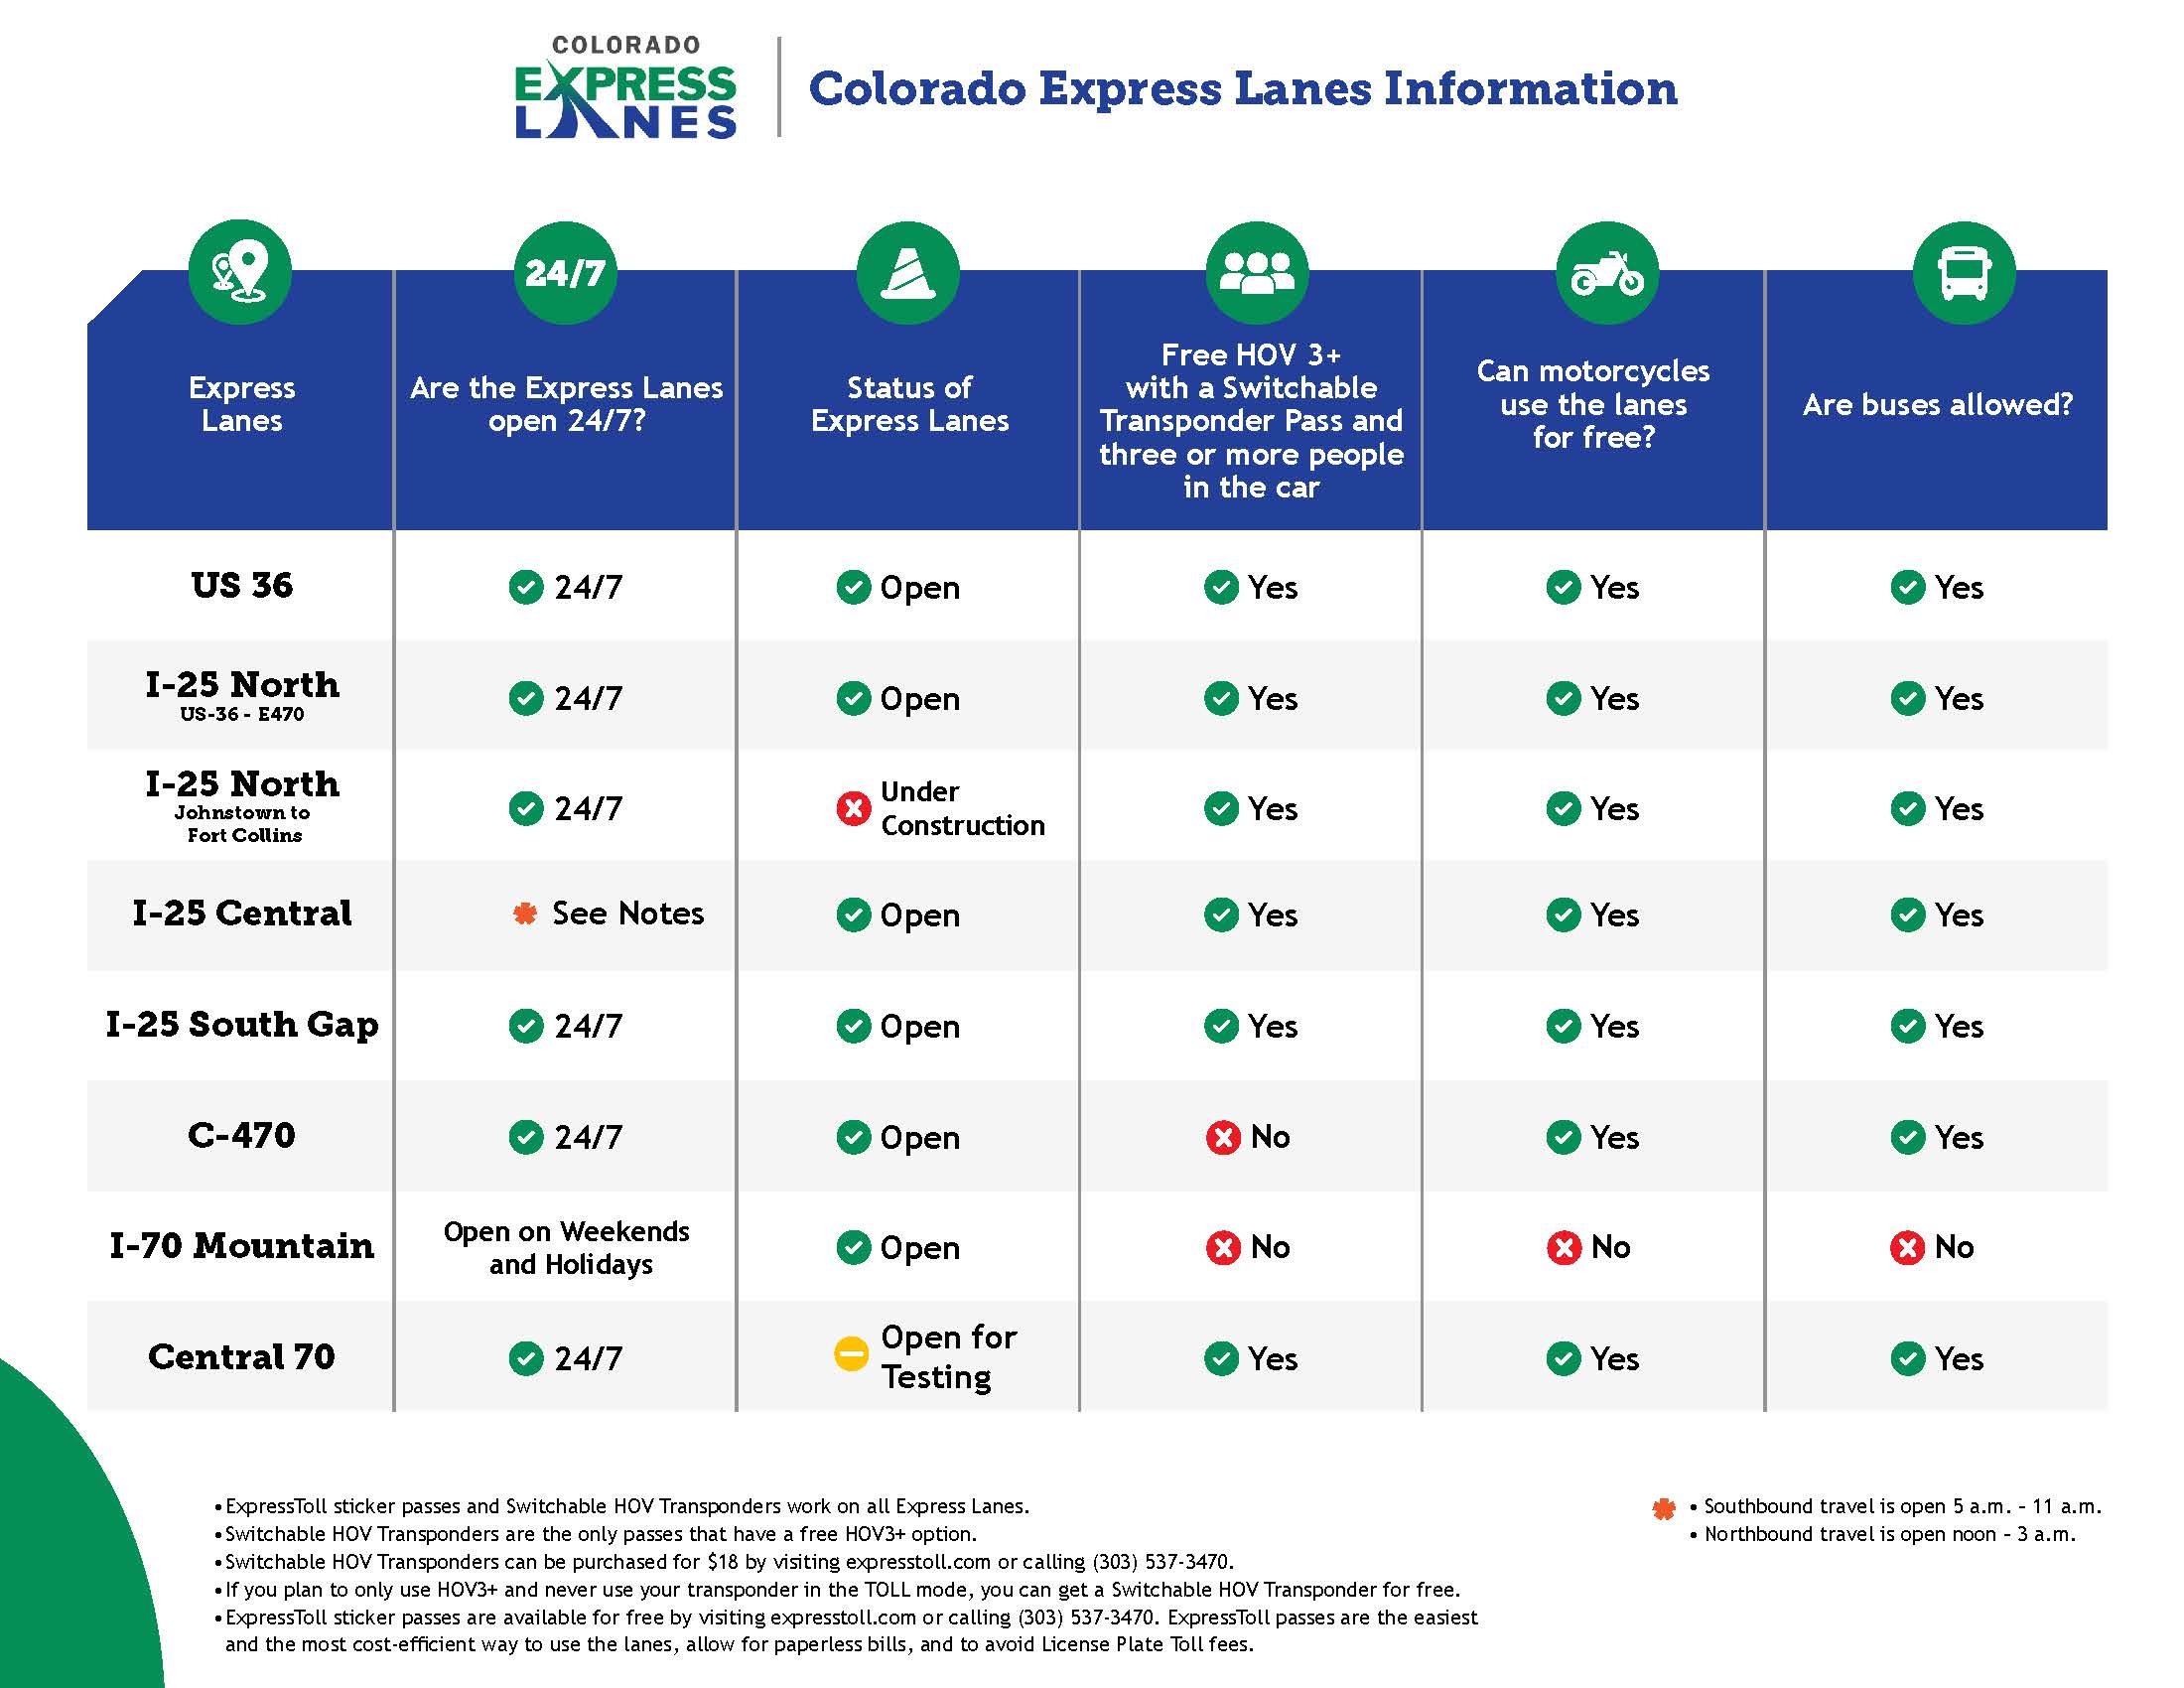 Colorado Express Lanes Infographic 